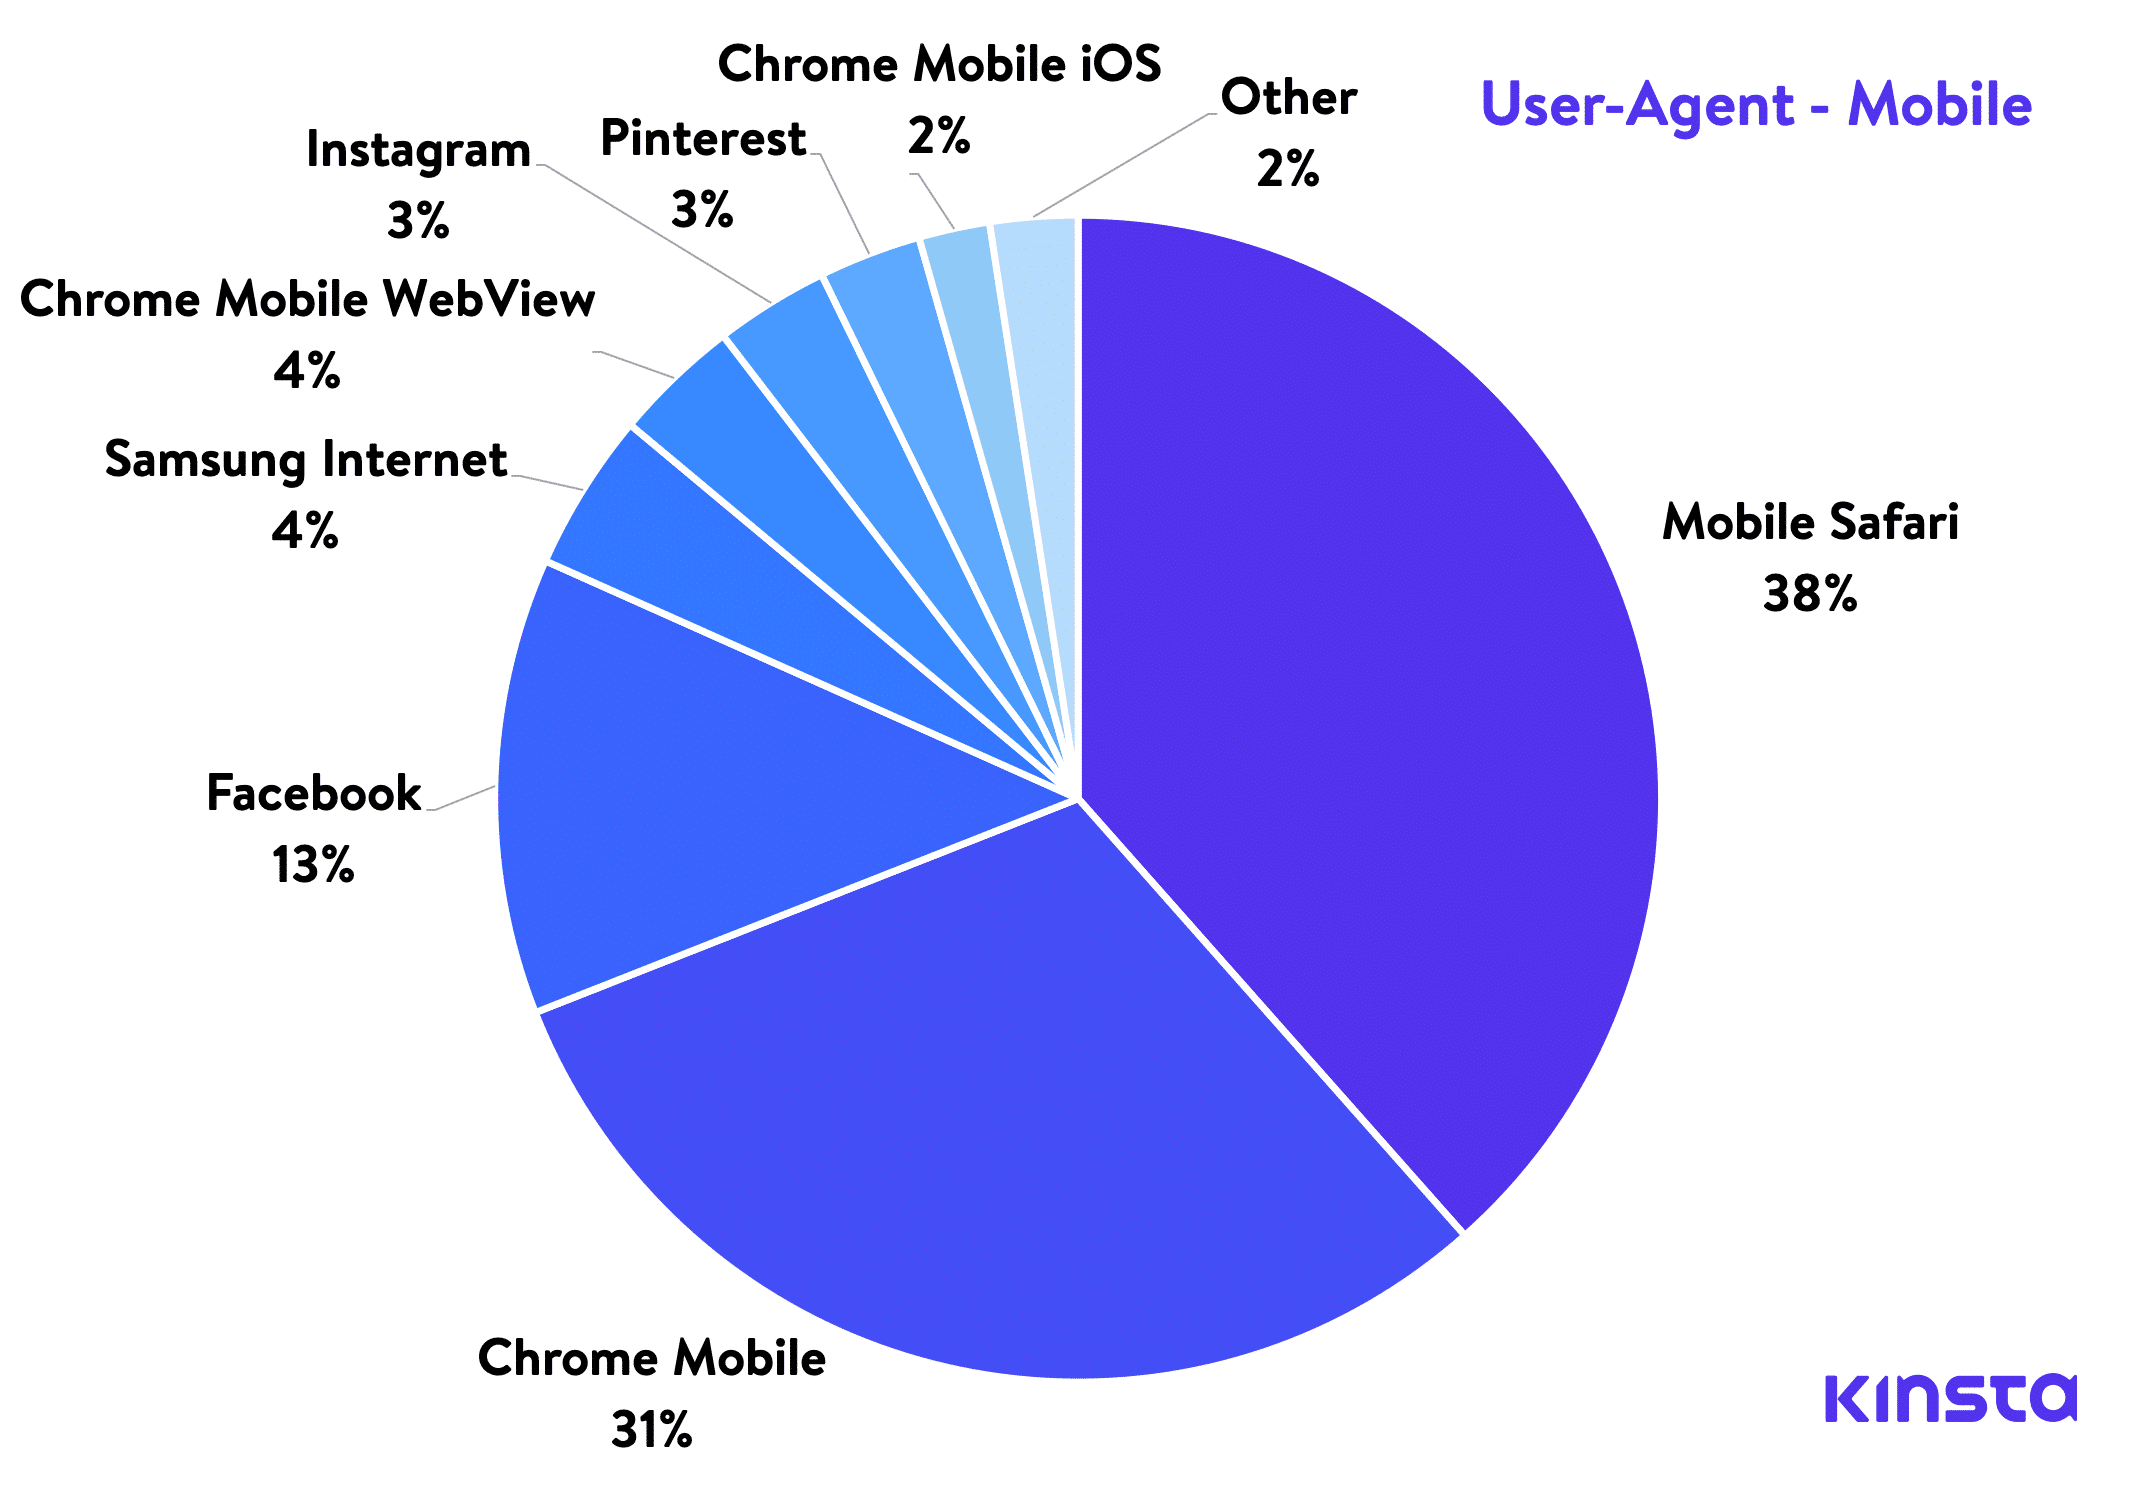 User-agent mobile